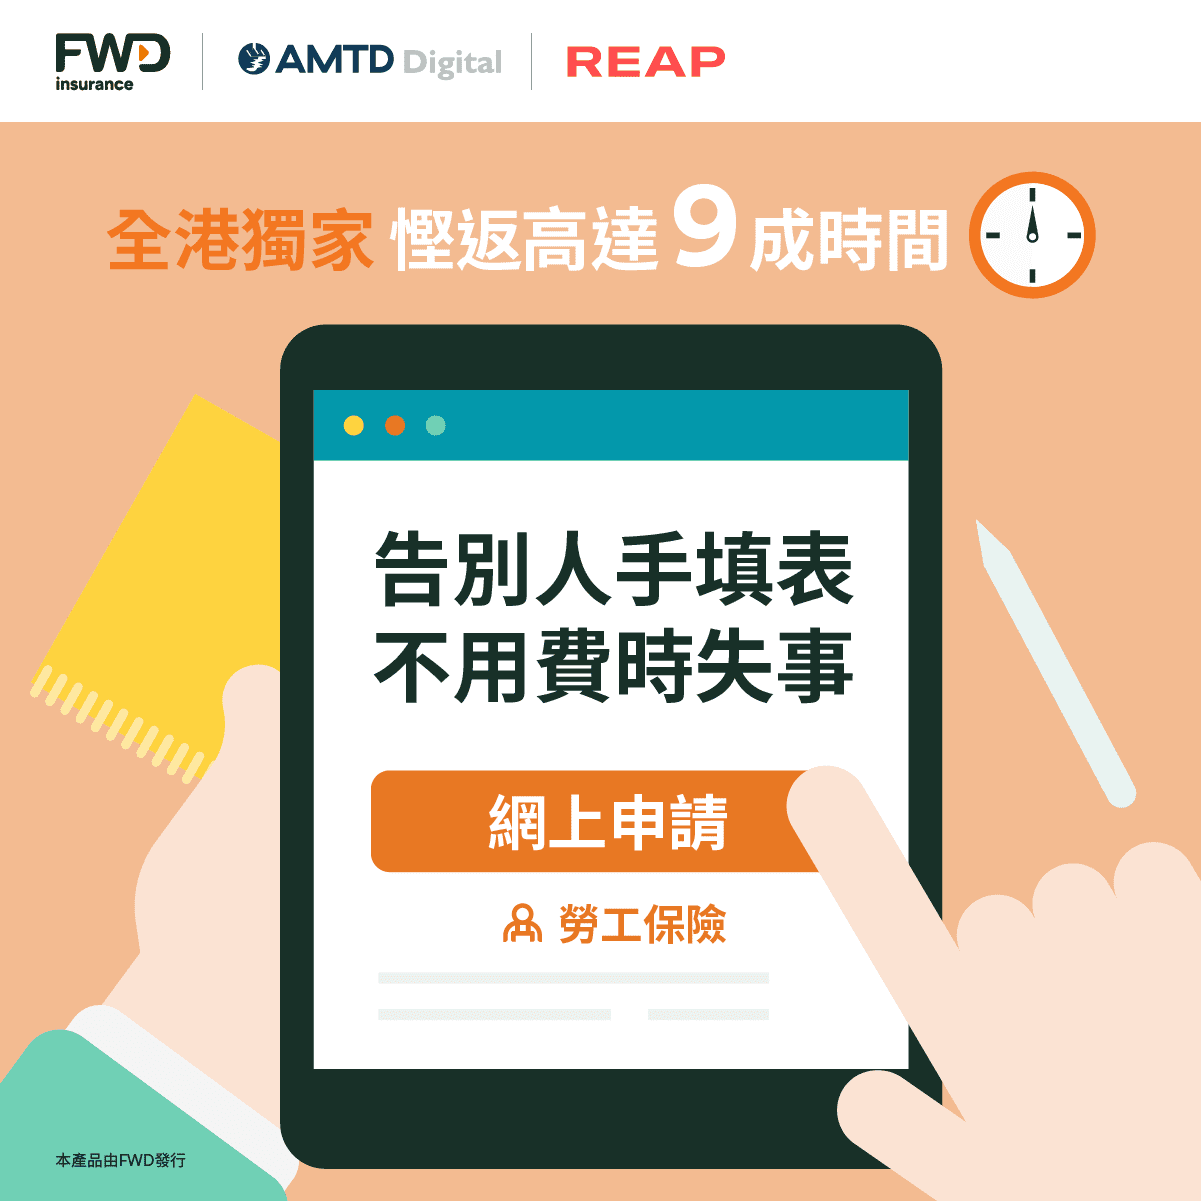 AMTD Digital | AMTDx FWD x REAP launch HK 1st Digital Employee’s Comp Insurance